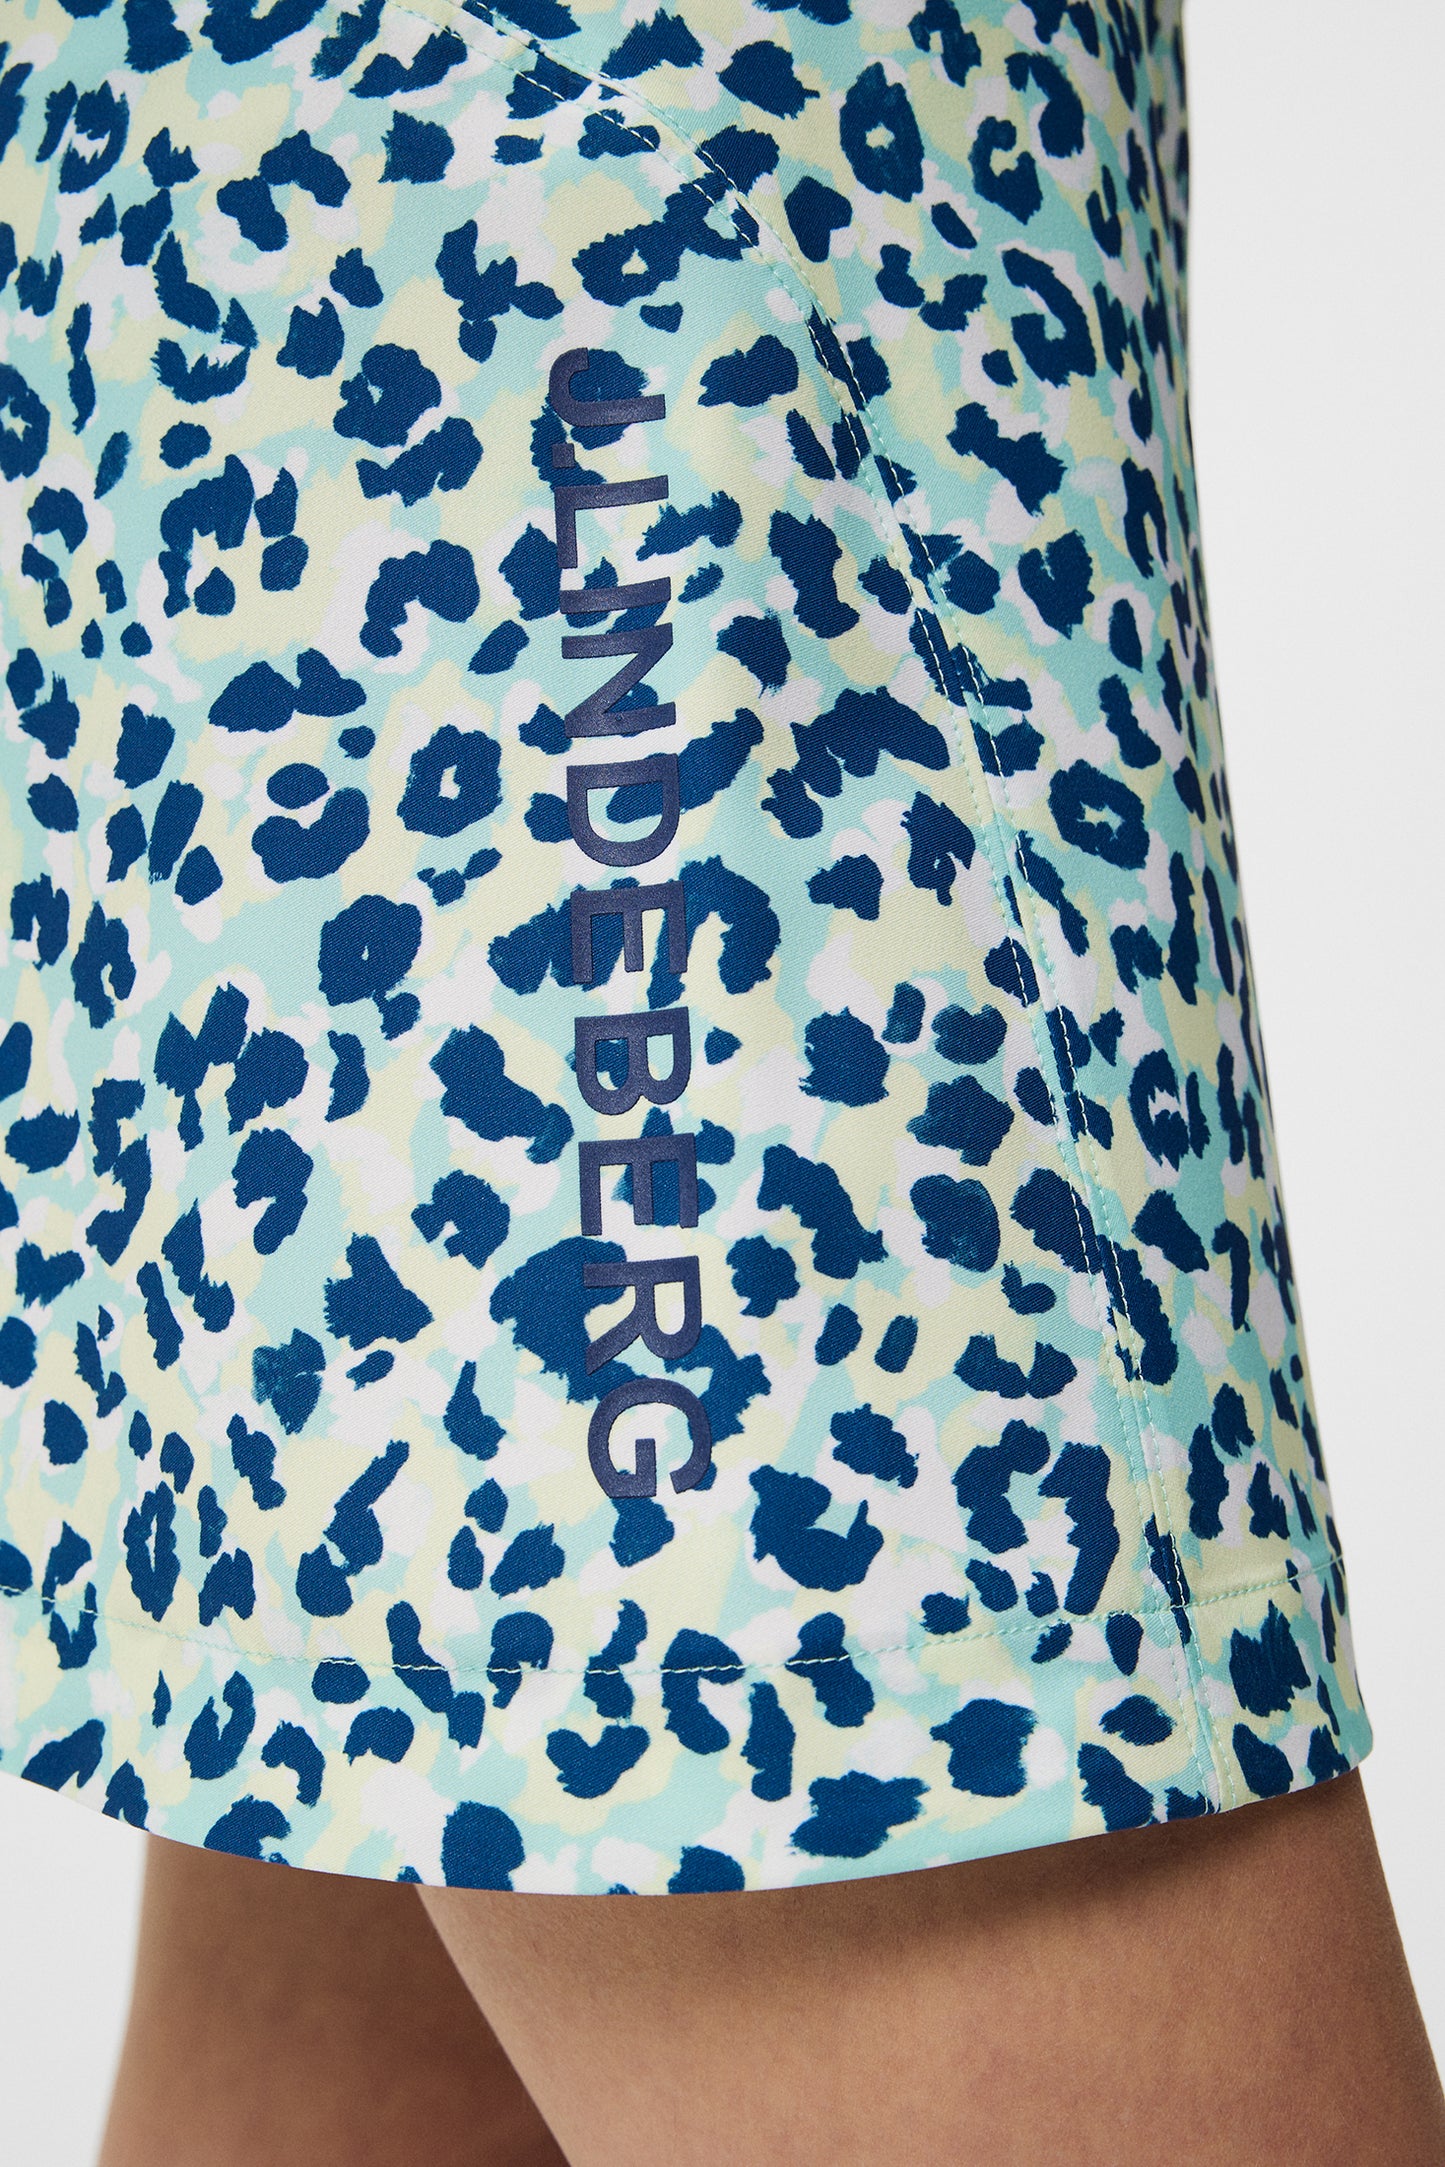 Themba Print Skirt / Leopard Aruba Blue